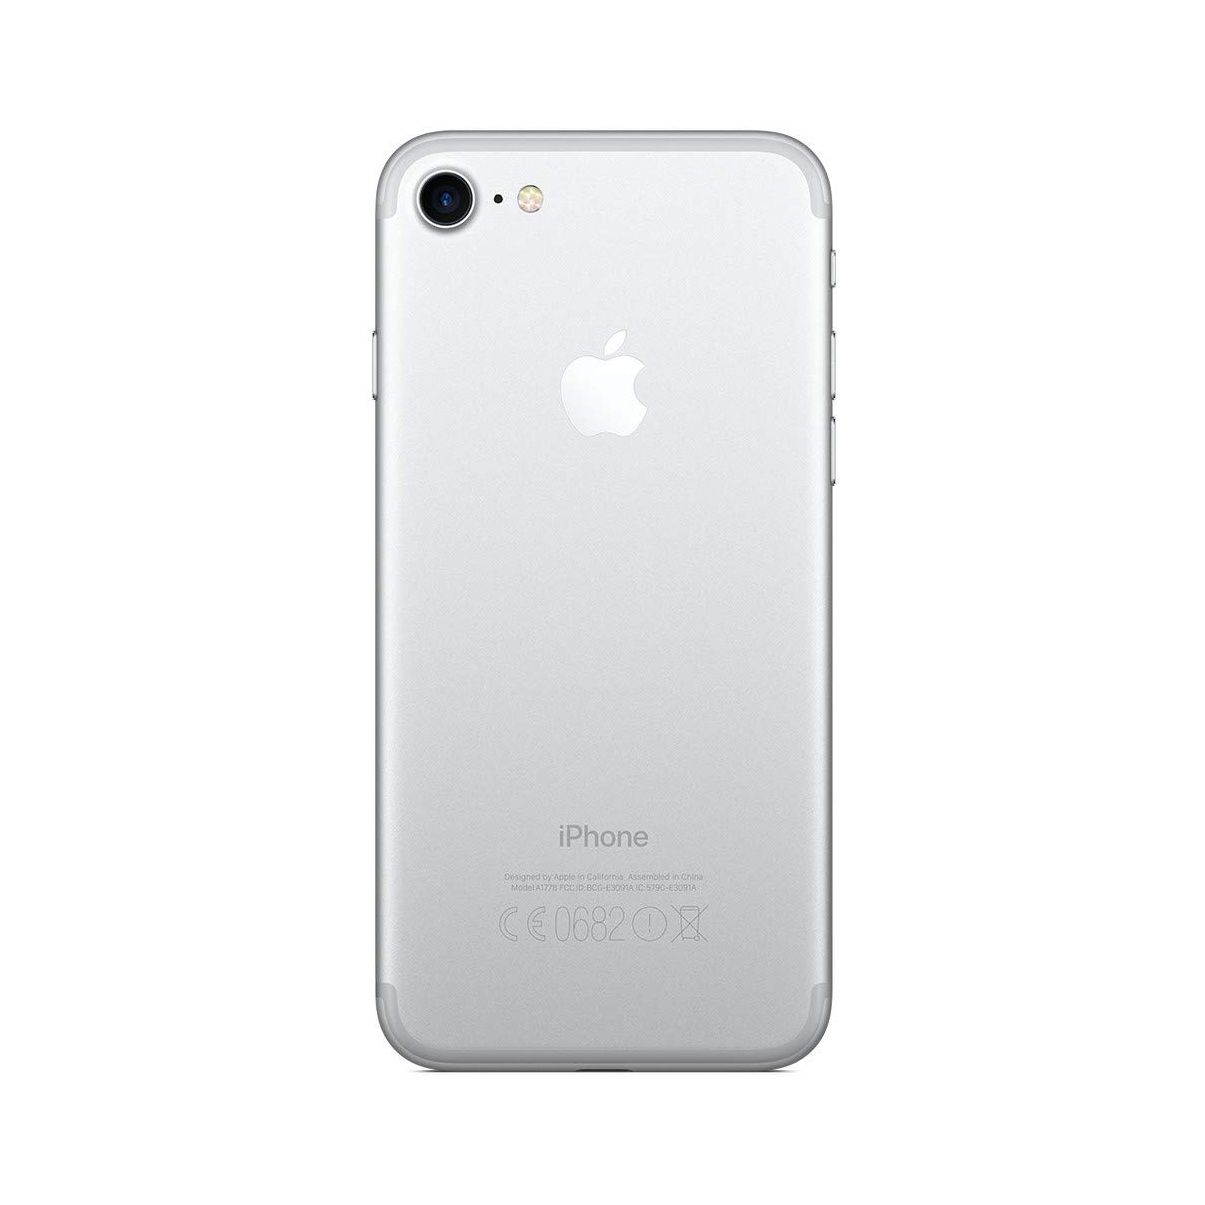 GB iPhone 7 silber 128 REFURBISHED (*) APPLE